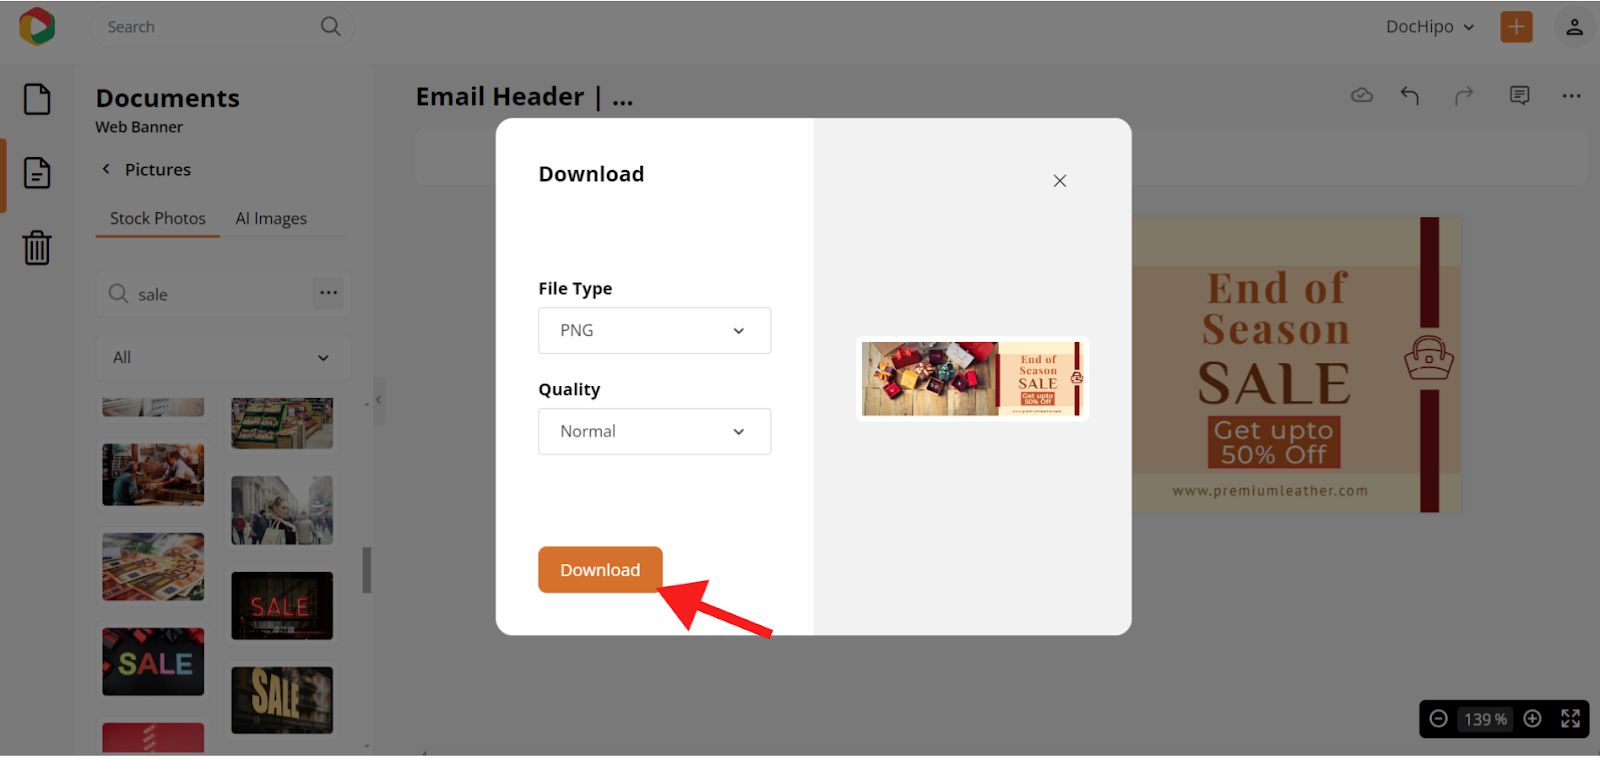 Download DocHipo Email header customized design